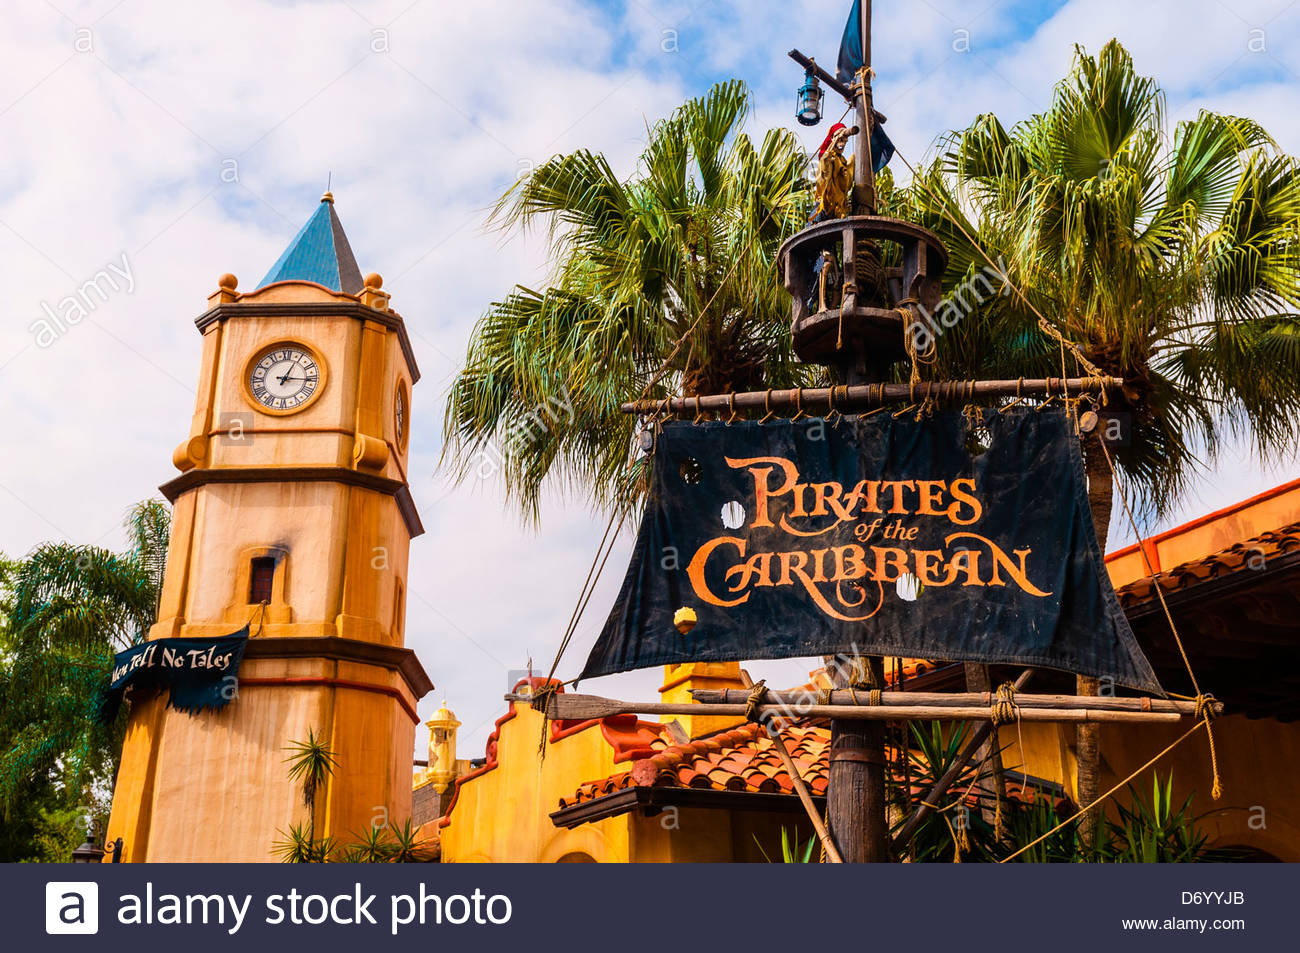 pirates-of-the-caribbean-ride-at-magic-kingdom-walt-disney-world-orlando-D6YYJB.jpg